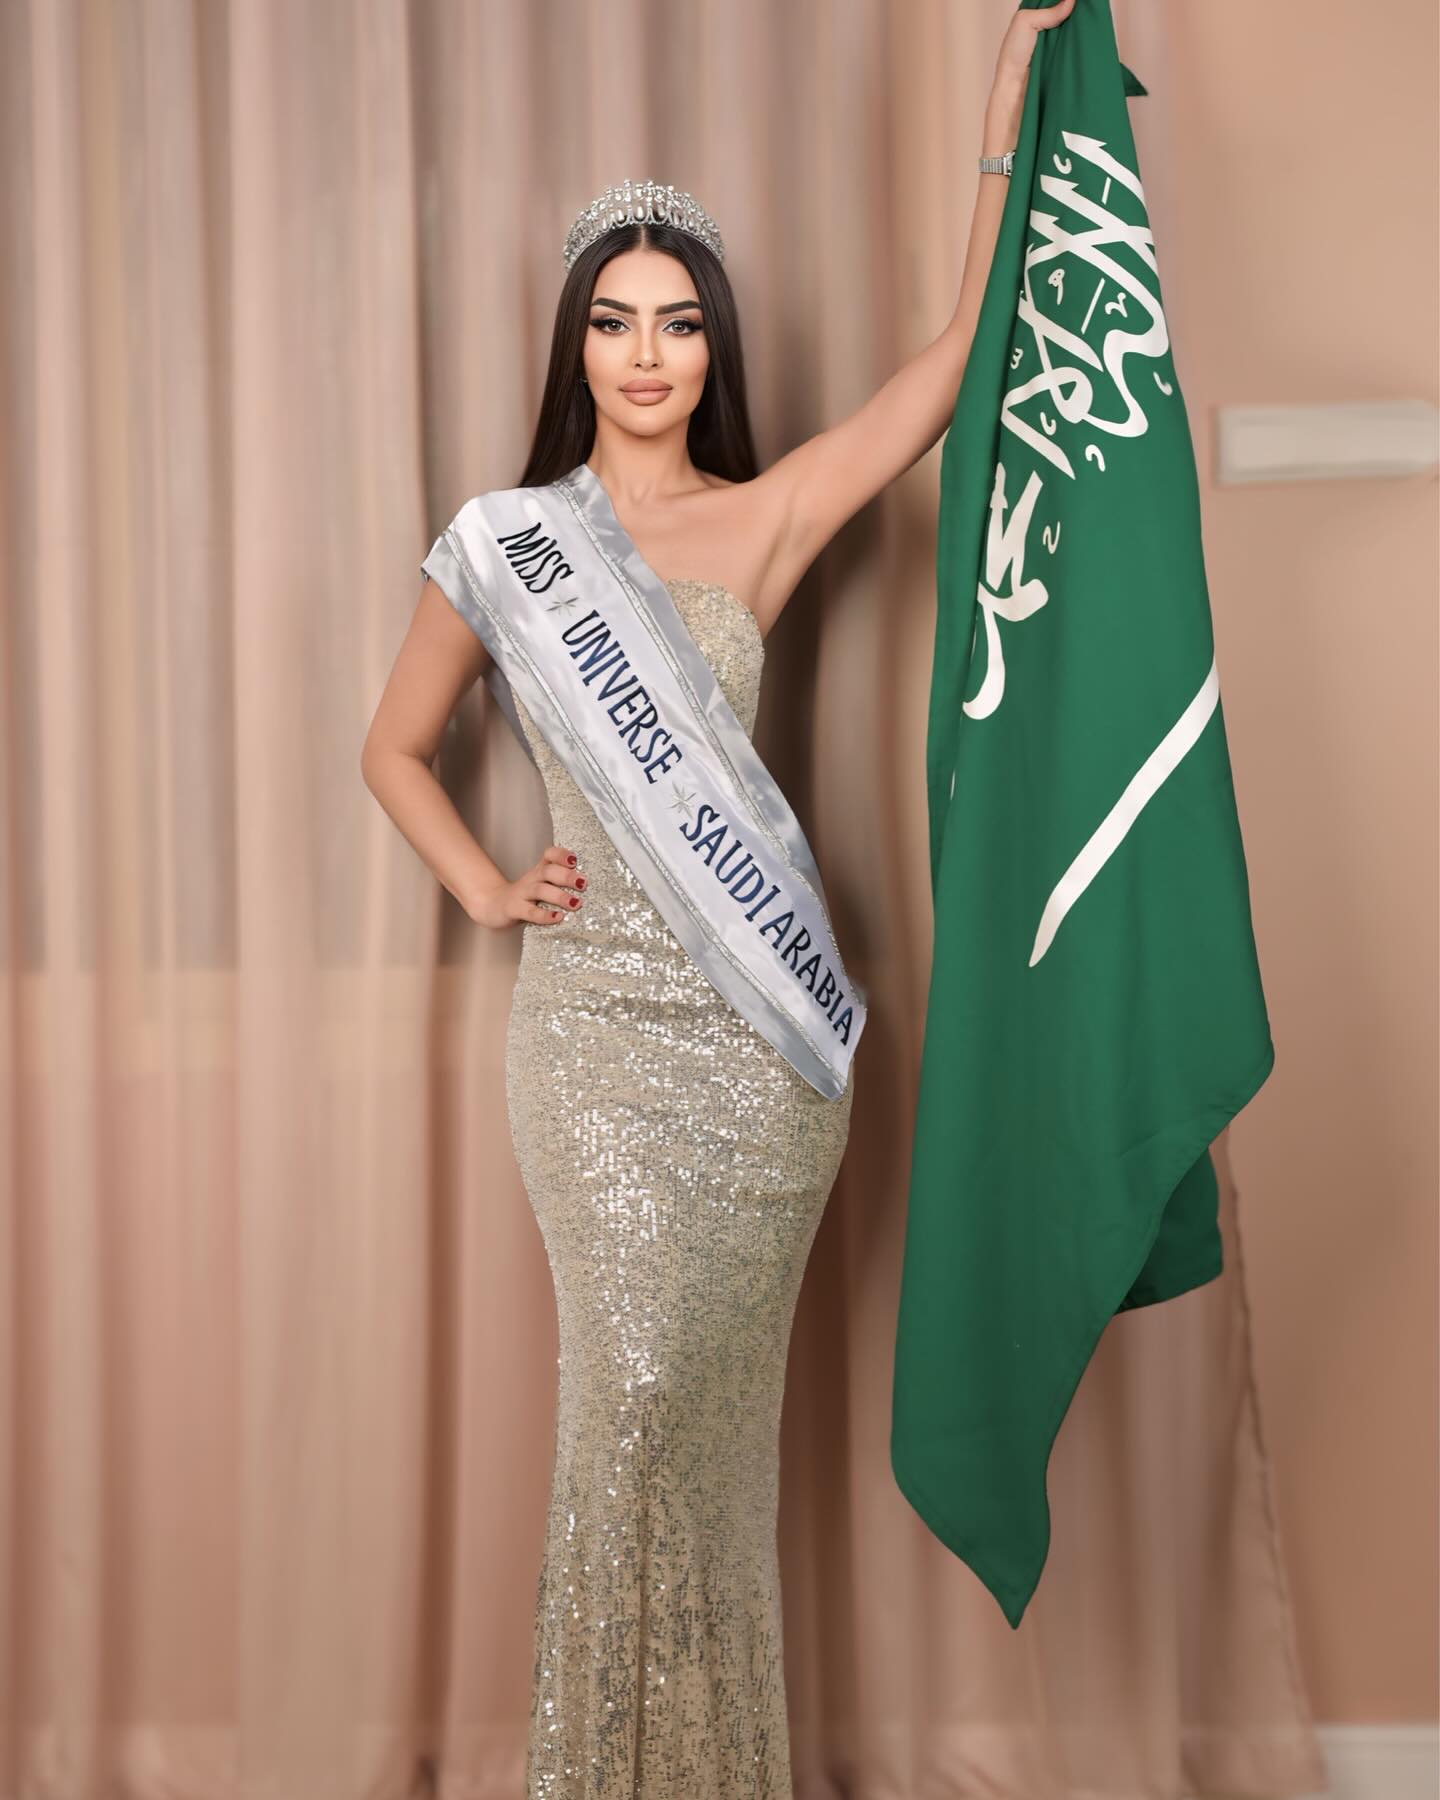 Saudi Arabian woman makes history: Rumy Alqahtani participates in Miss Universe